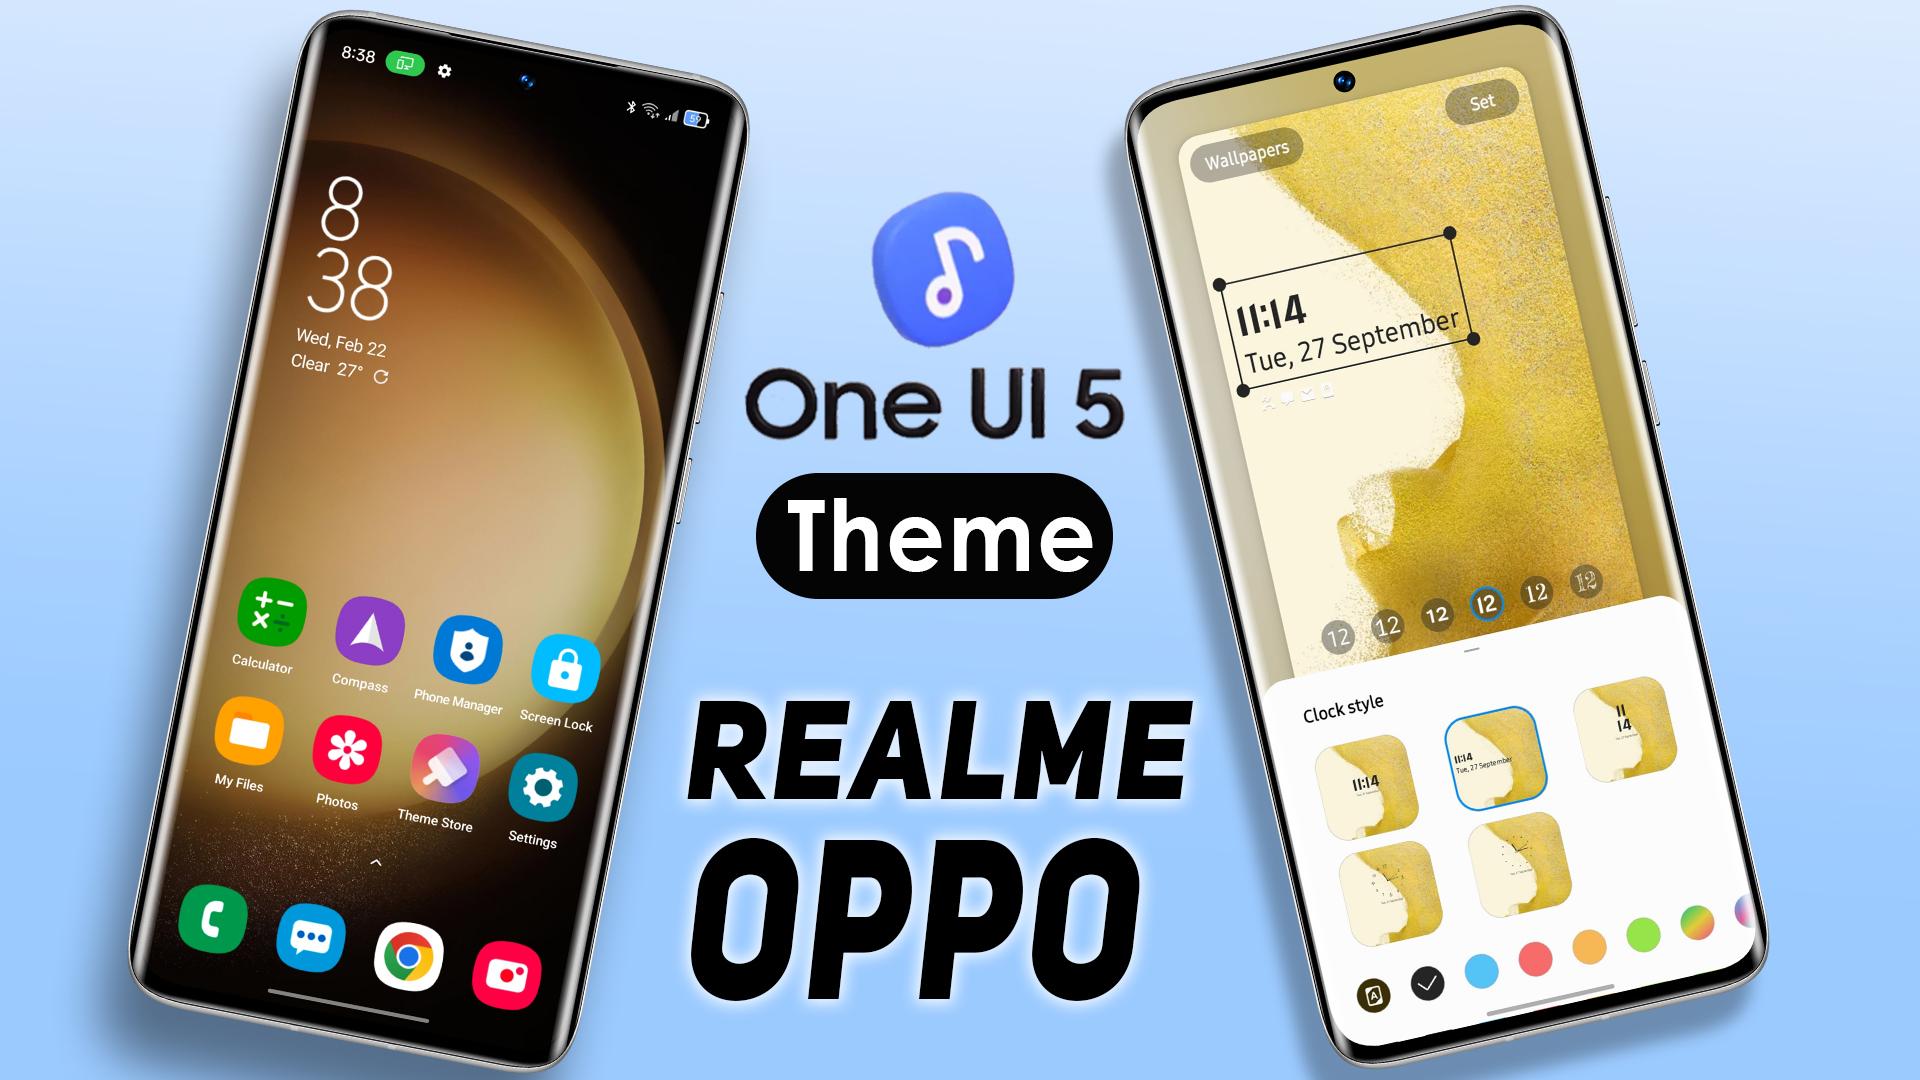 OneUI 5.1 theme for realme